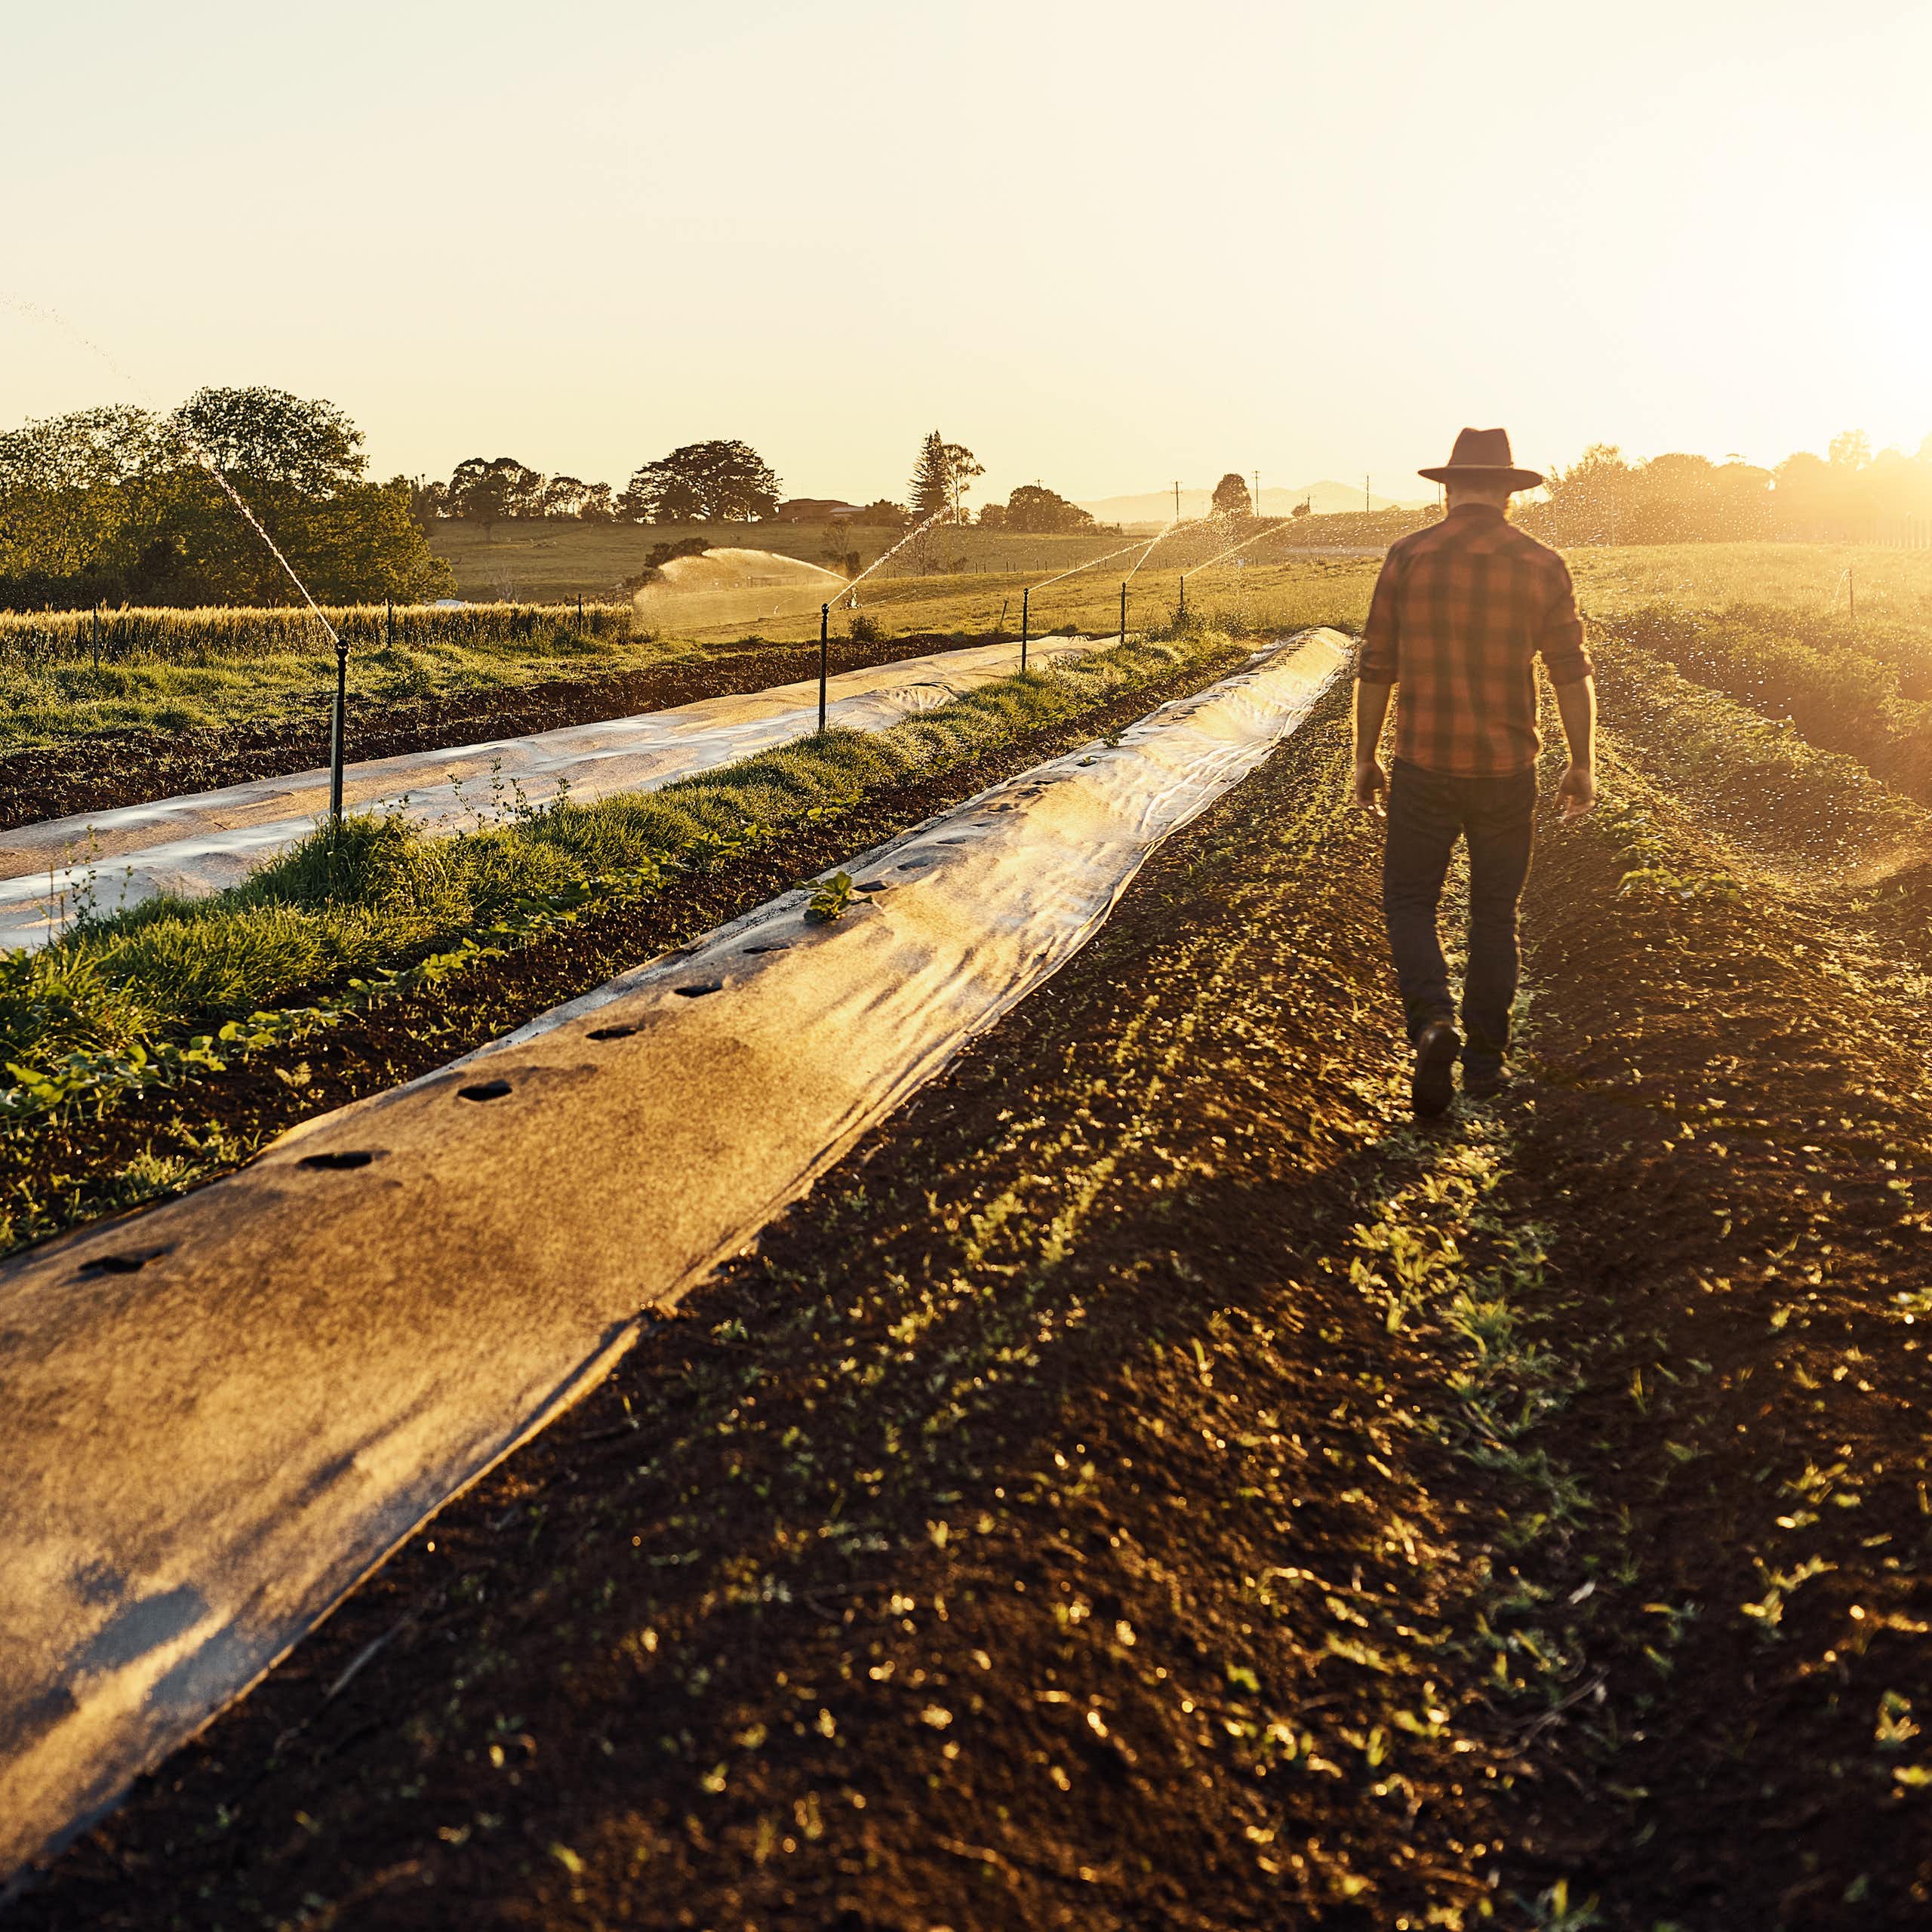 A farmer walks in a field at sunrise.